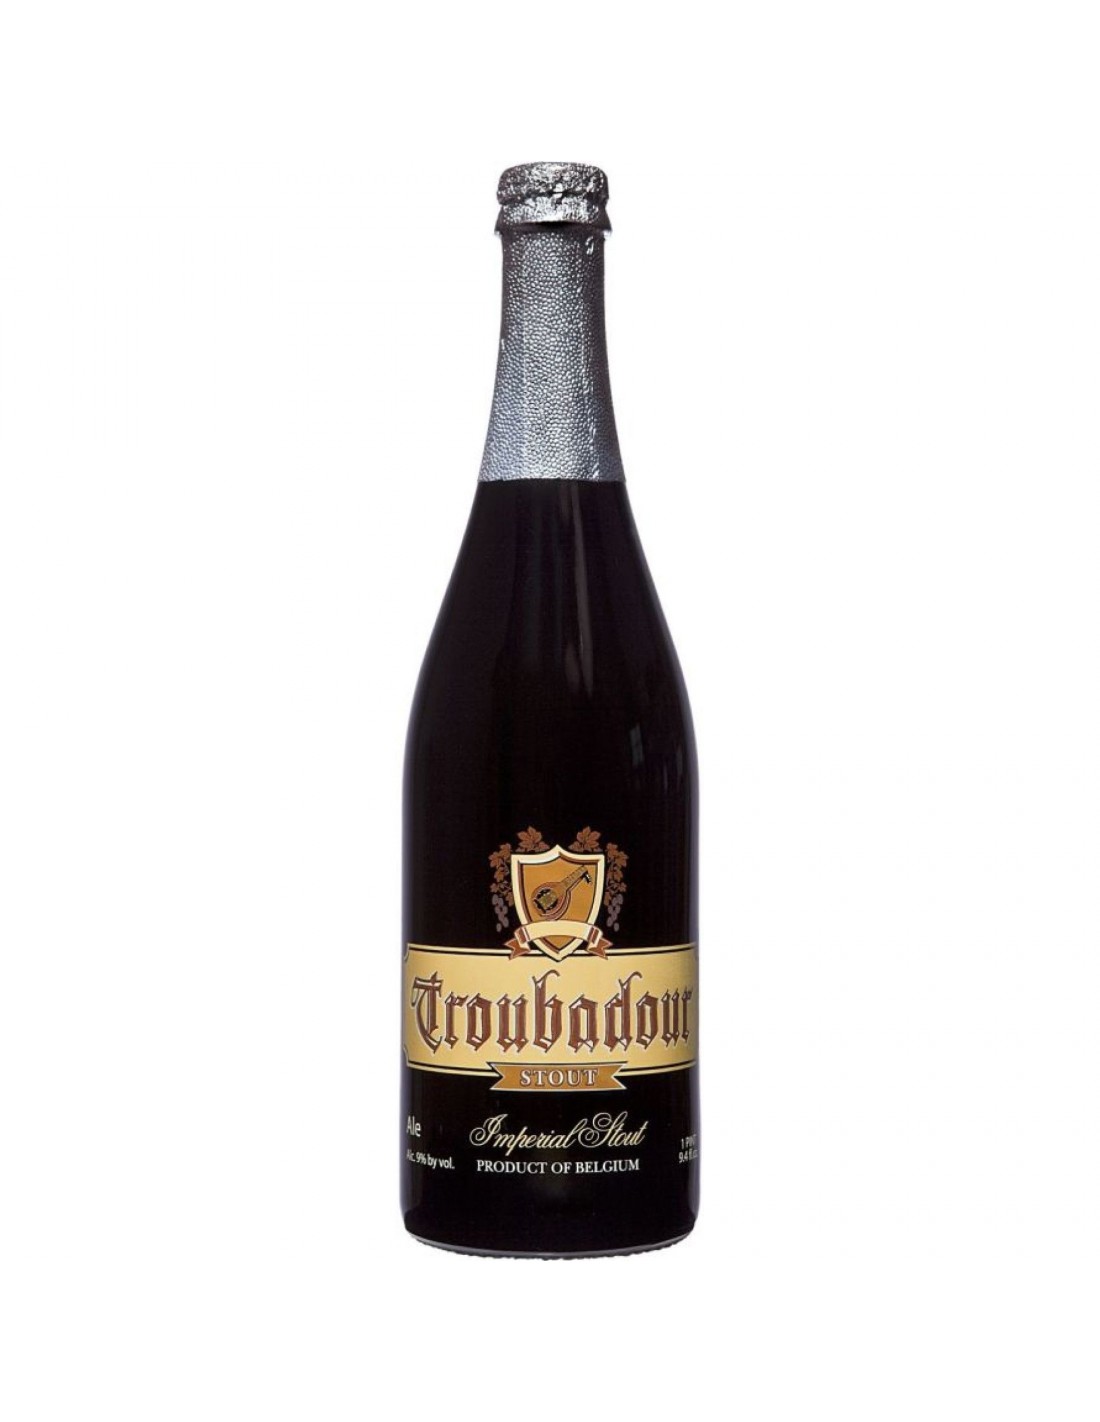 Bere neagra, nefiltrata Troubadour ImperiaL, 9% alc., 0.33L, Belgia alcooldiscount.ro